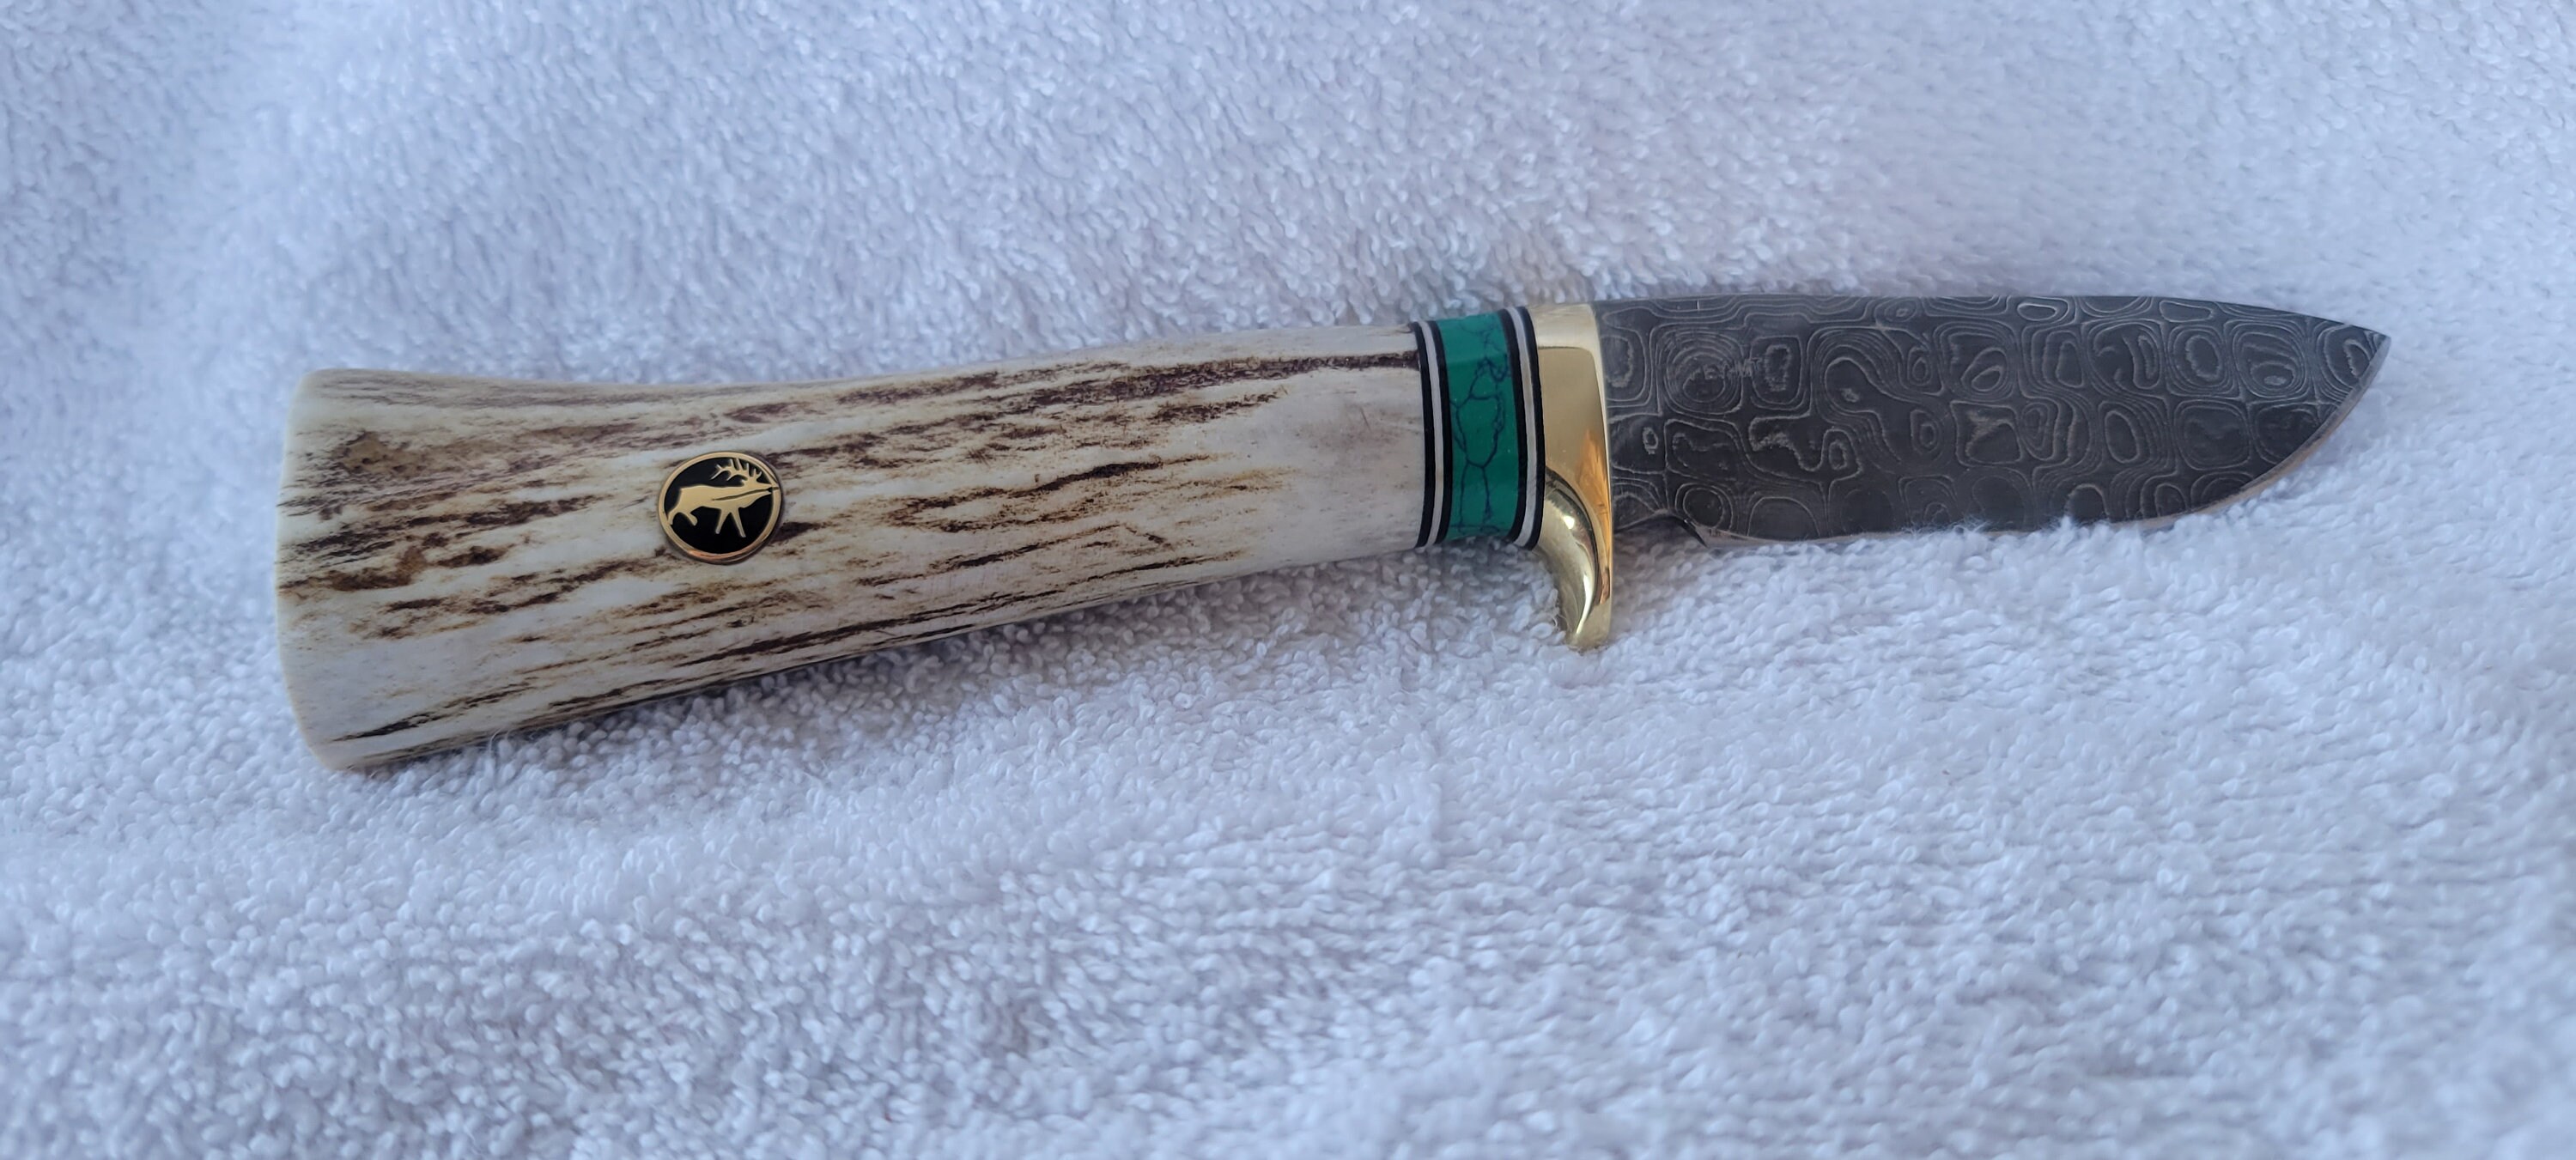 Made in Montana Handmade knife with Elk Antler, green spacer. Buffalo nickel in end cap.